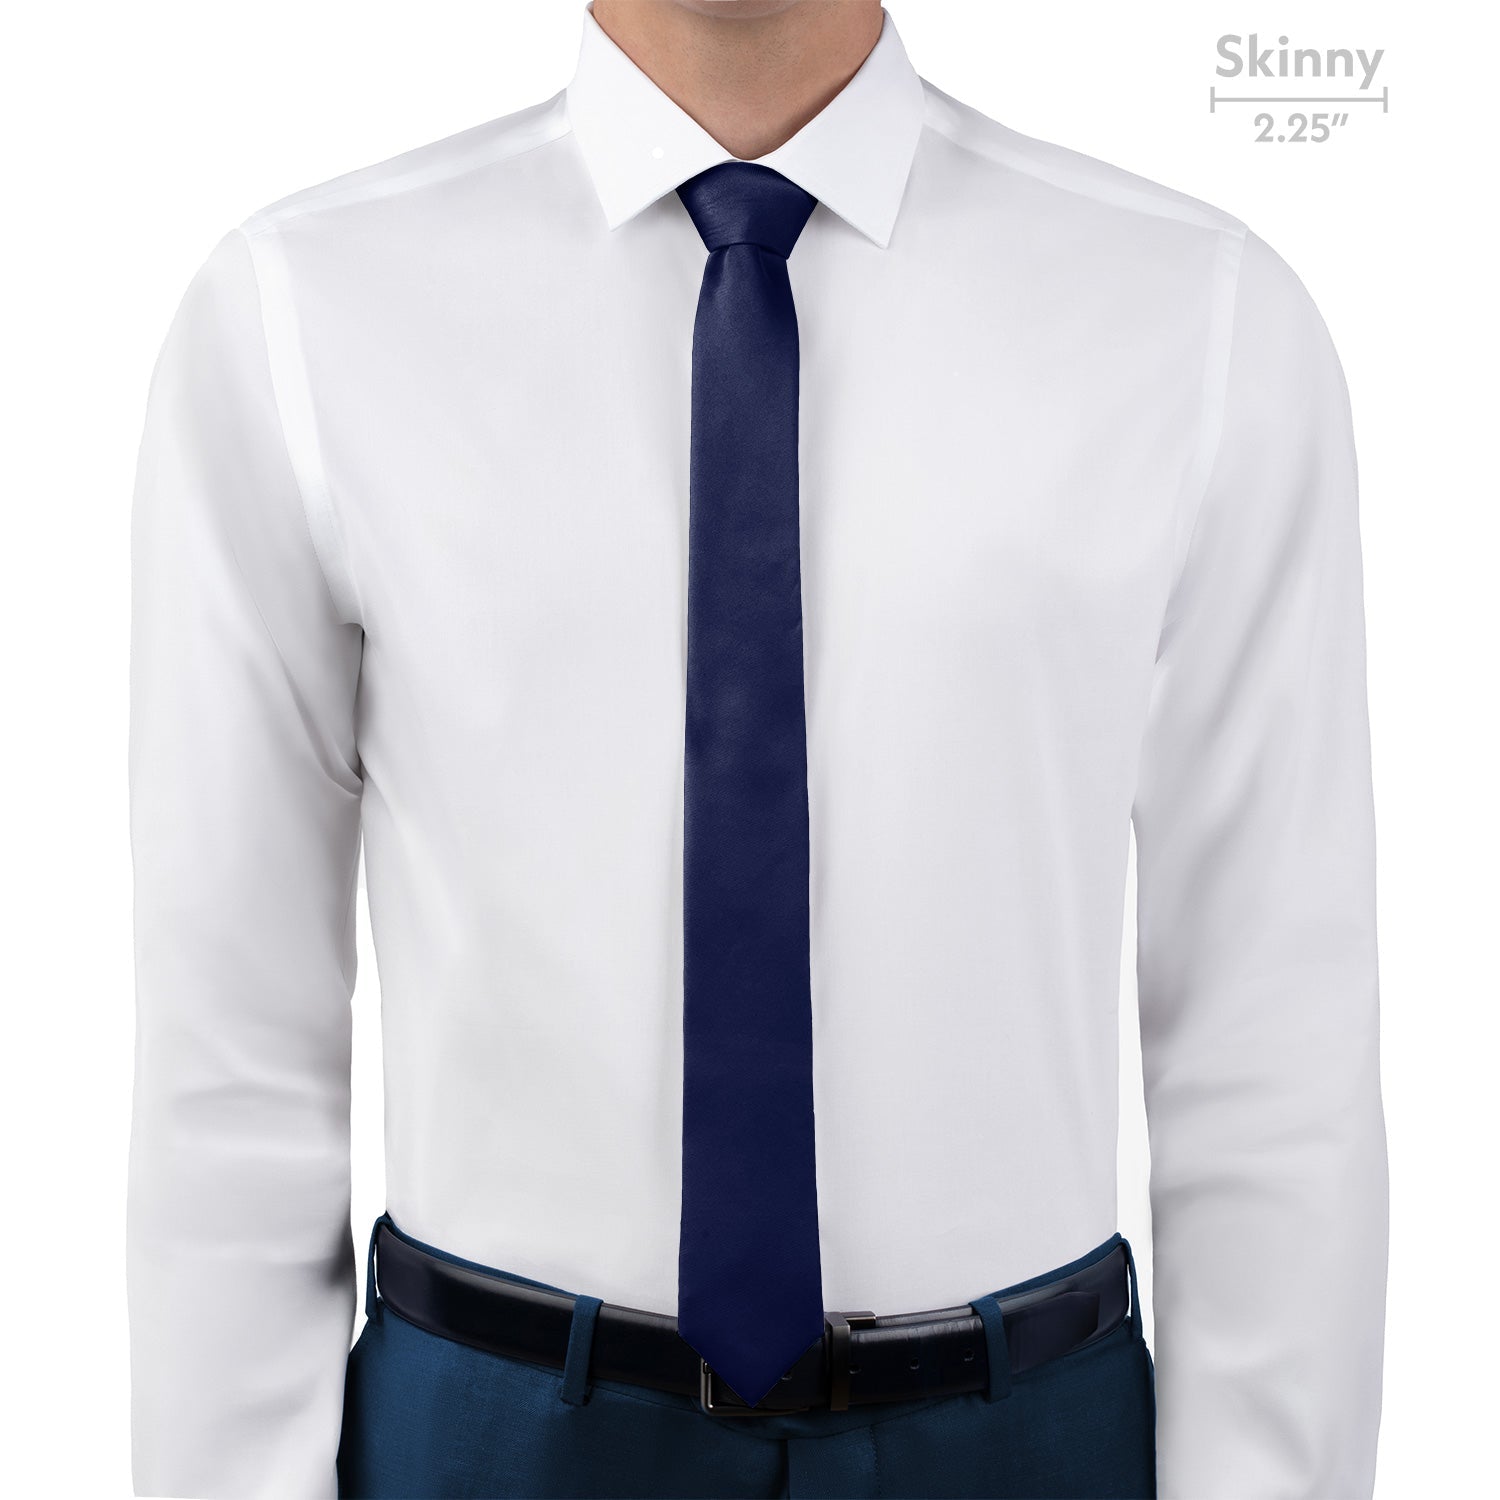 Solid KT Navy Necktie - Skinny - Knotty Tie Co.